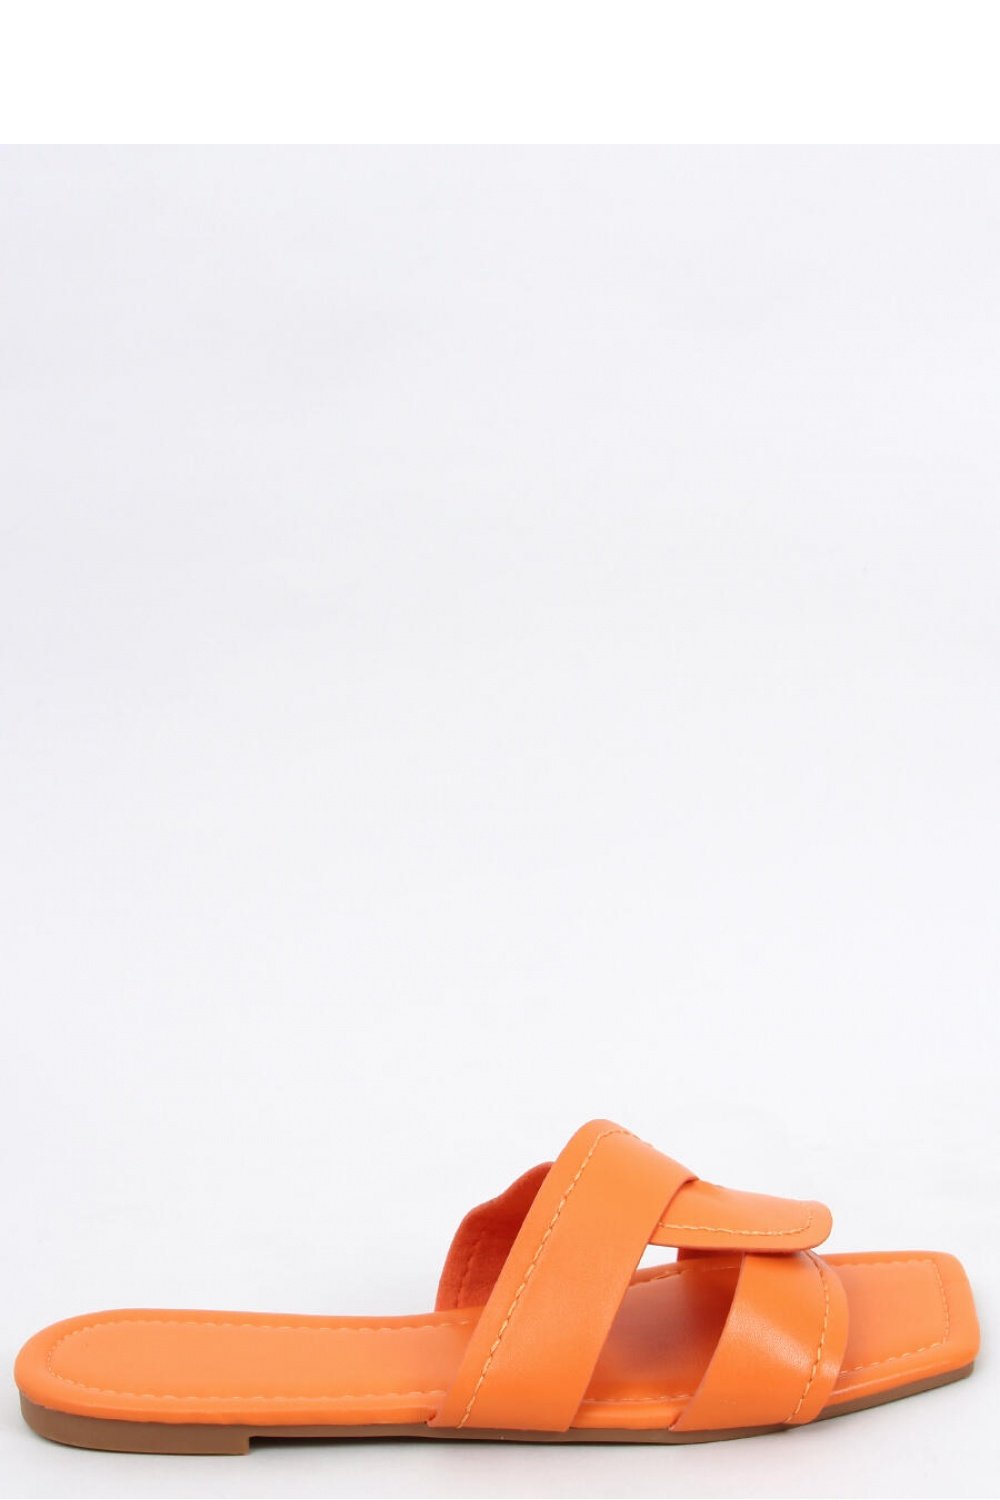 Flip-flops model 164239 Inello Posh Styles Apparel